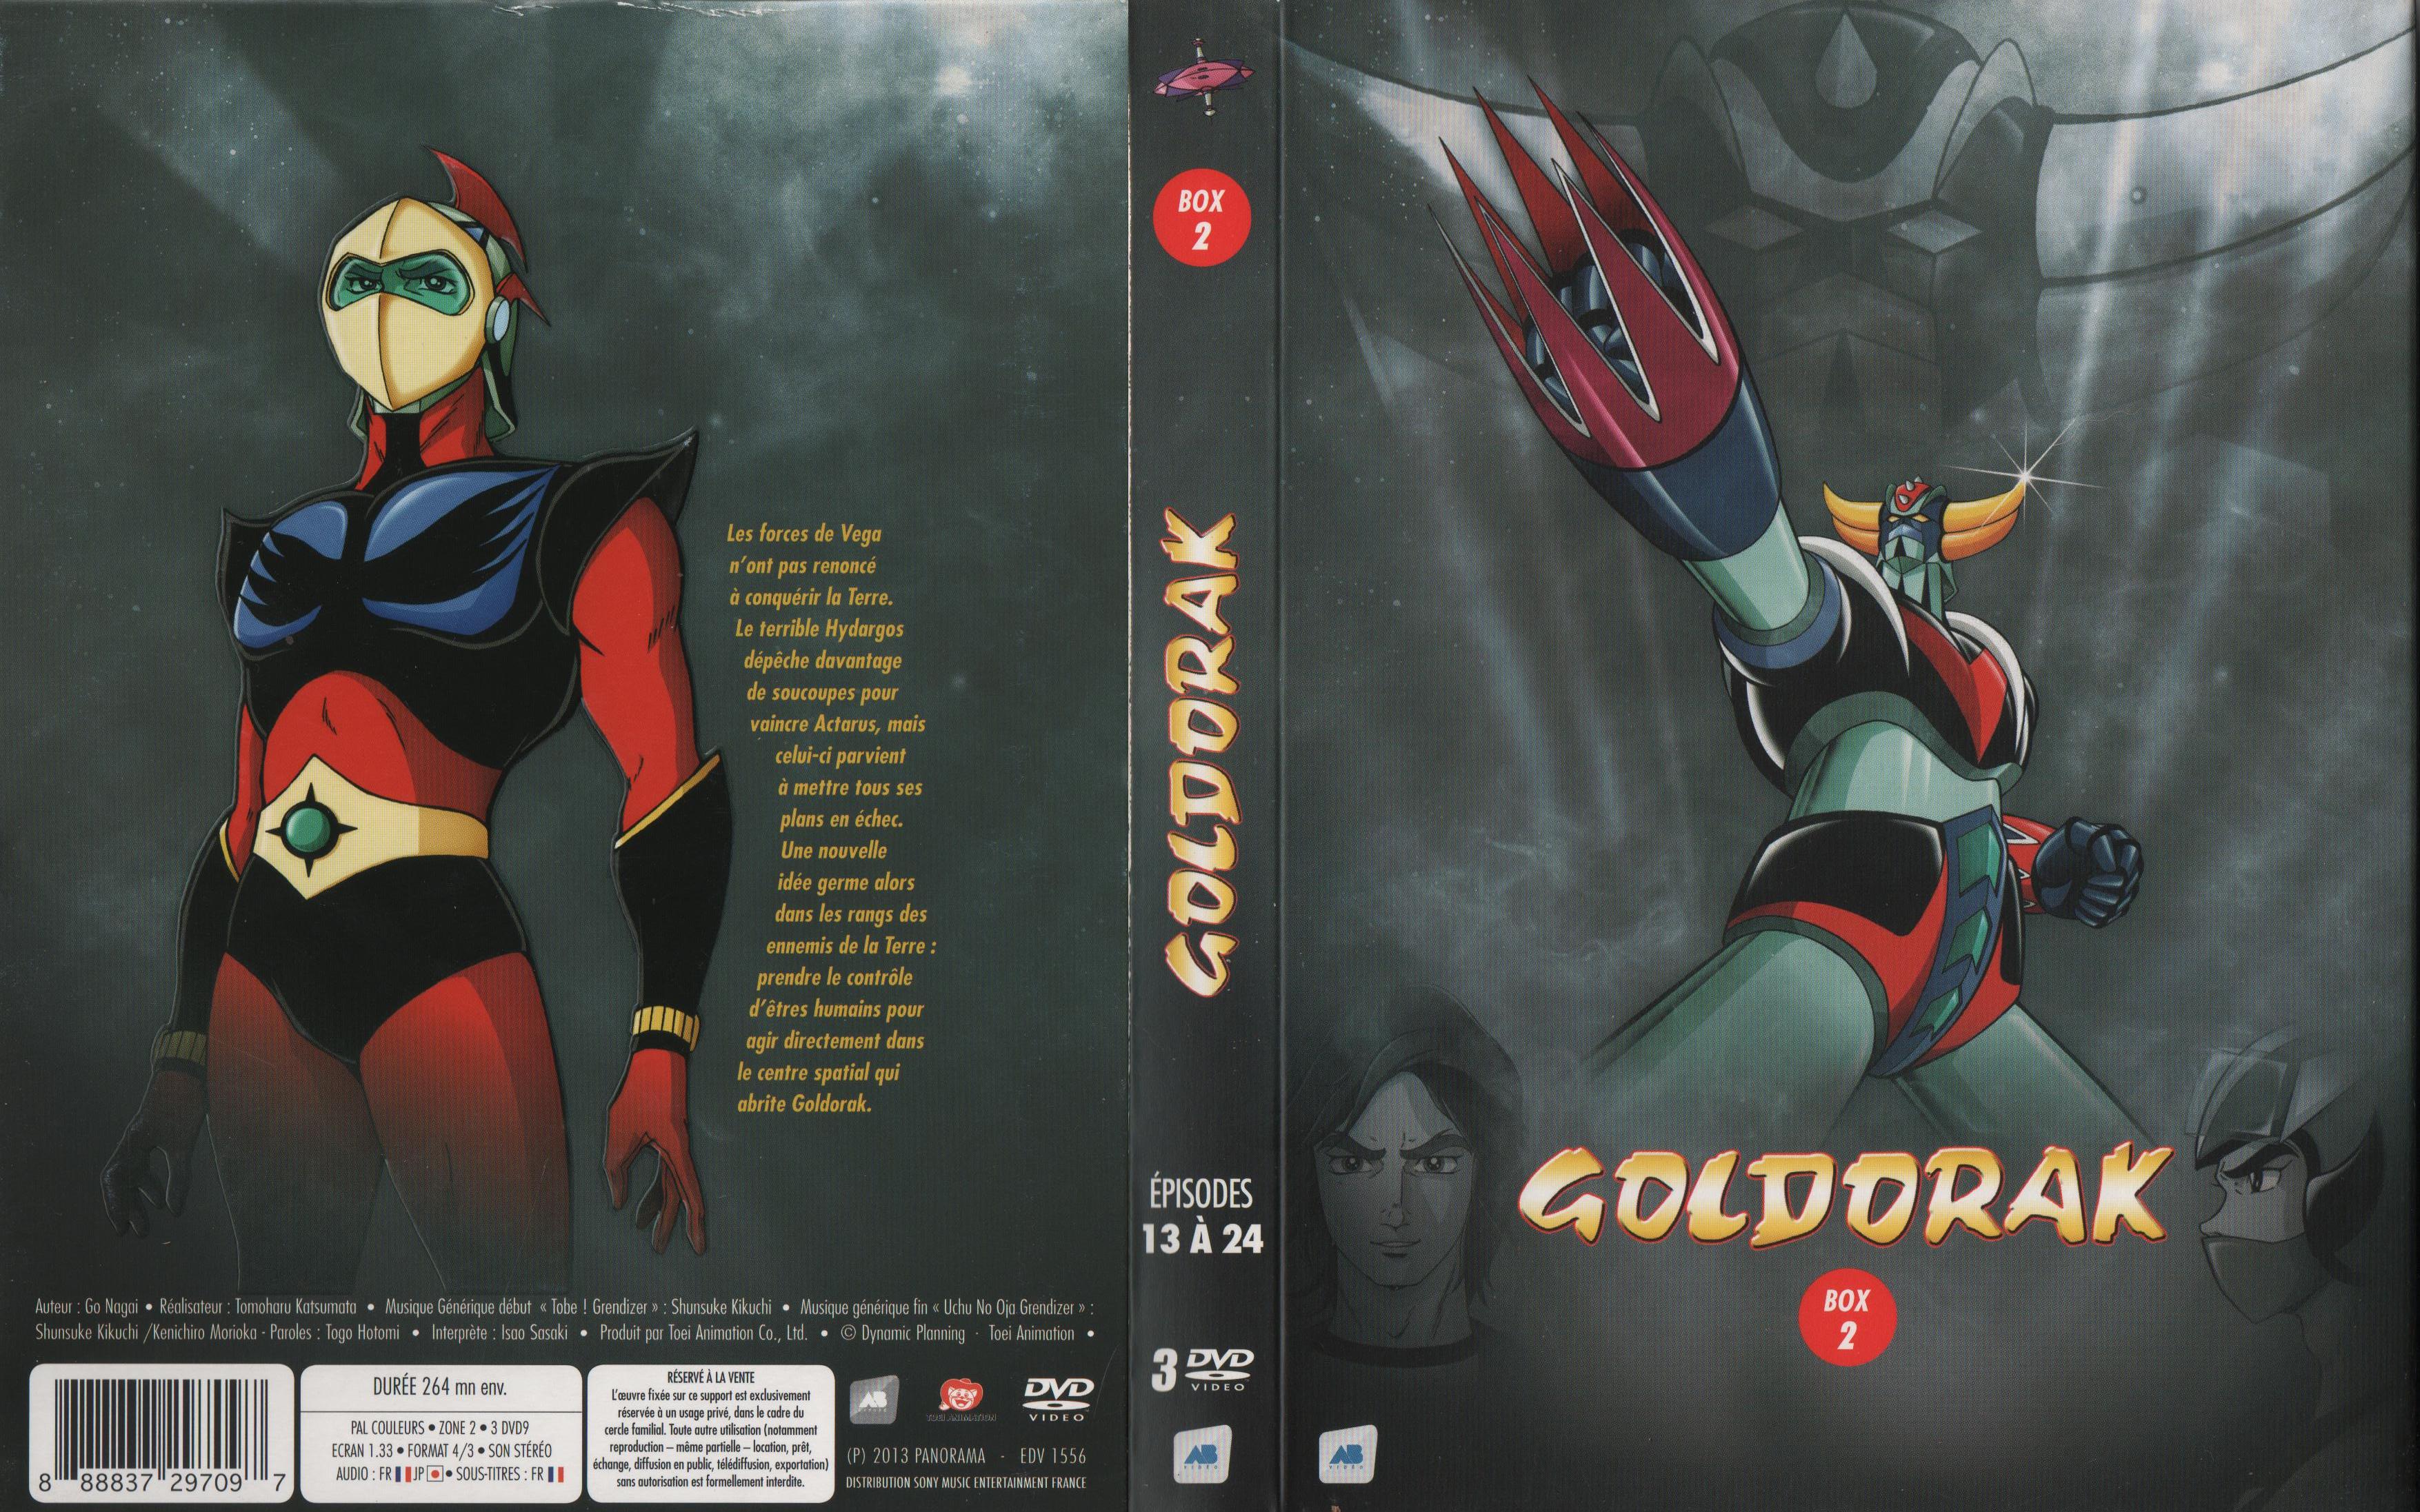 Jaquette DVD Goldorak Box 2 v2